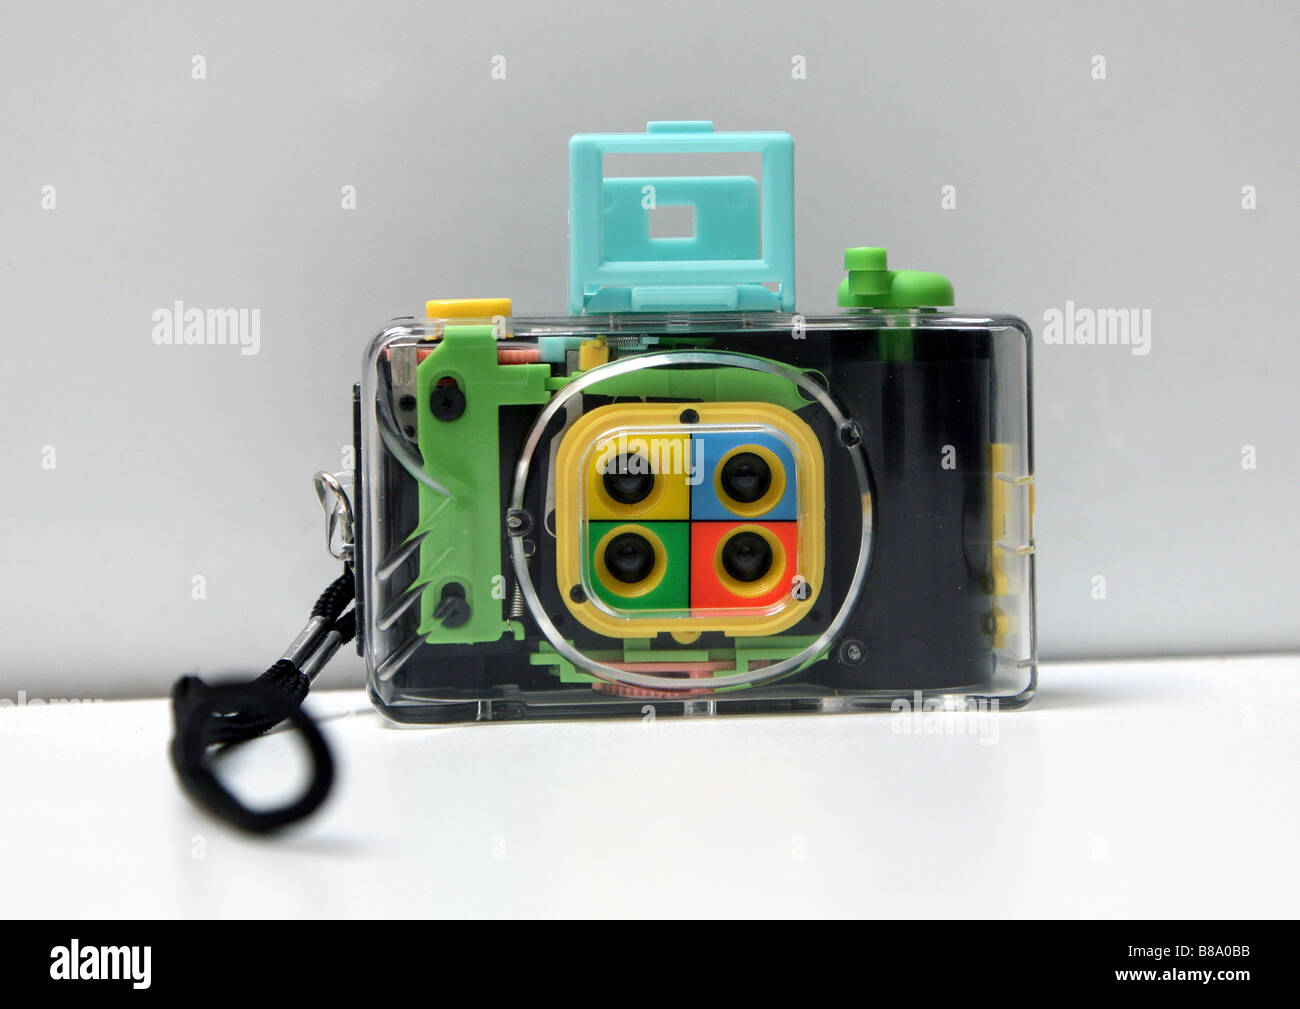 Camara lomo fotografías e imágenes de alta resolución - Alamy